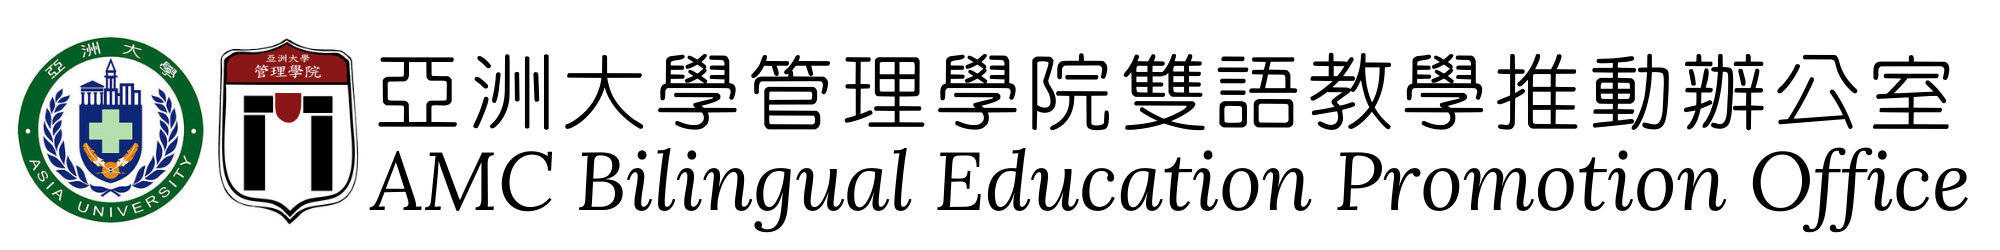 Asia University Bilingual Education Promotion Office